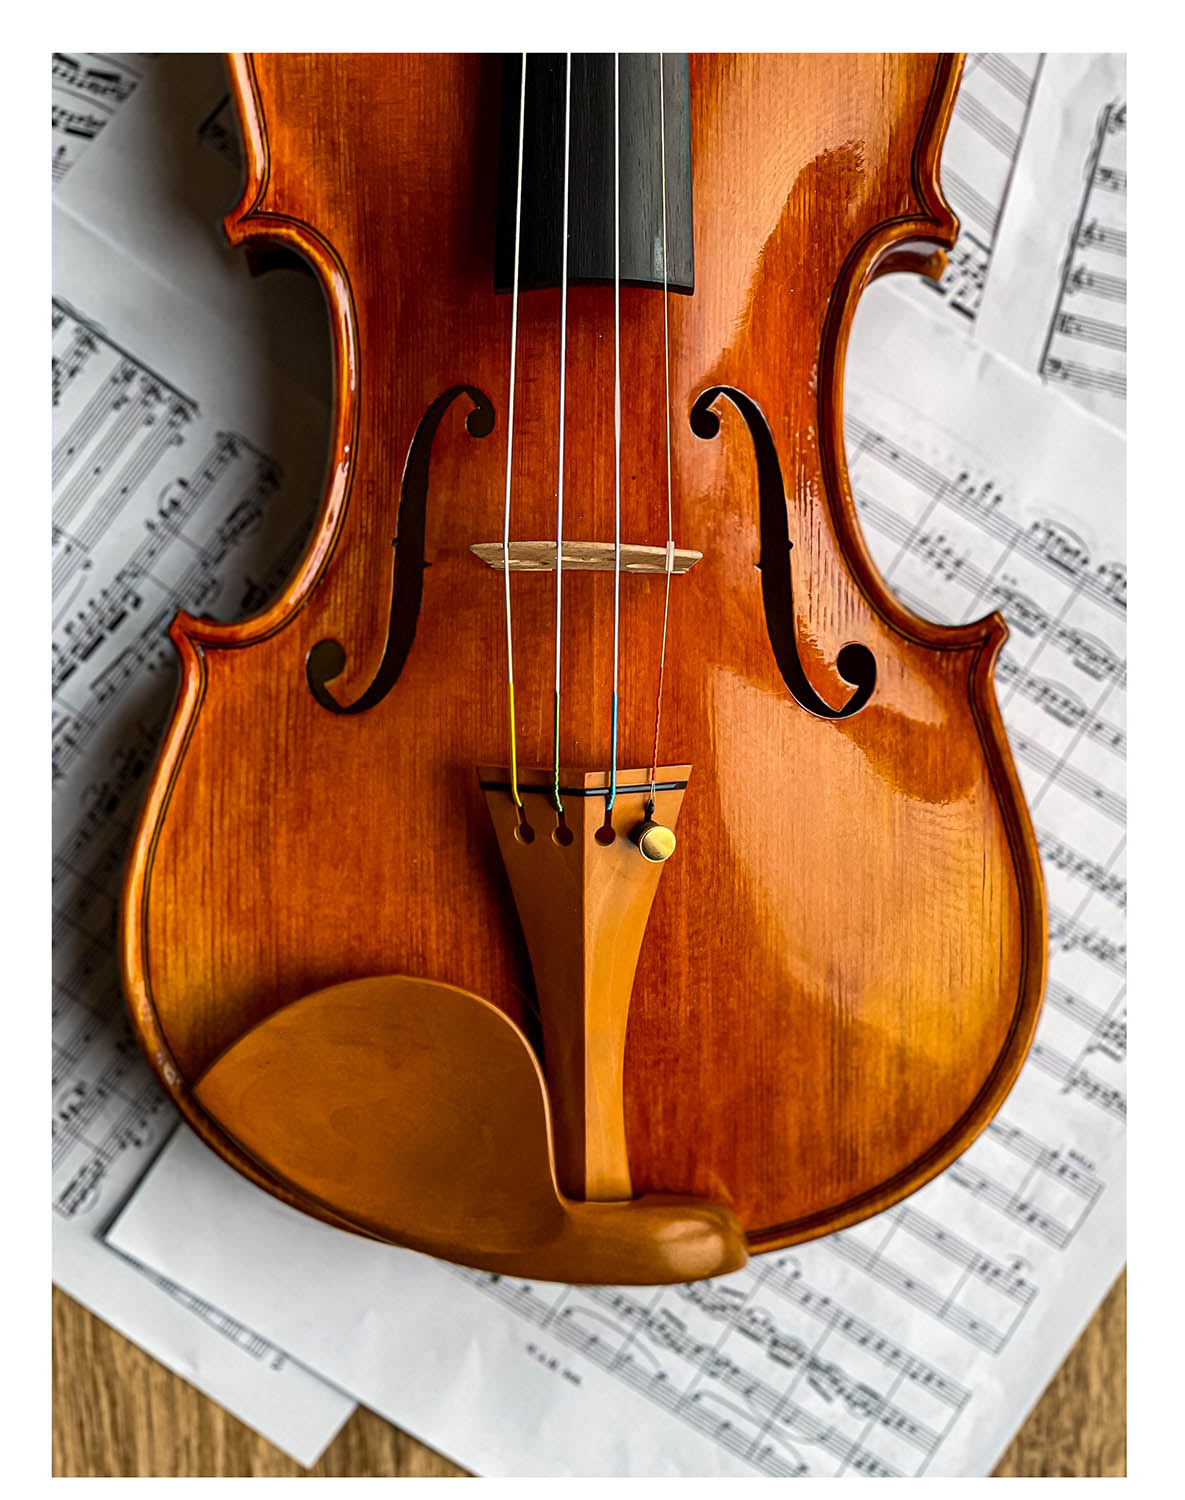 Stradivari Kinnhalter Violine Buchsbaum, ZK-305